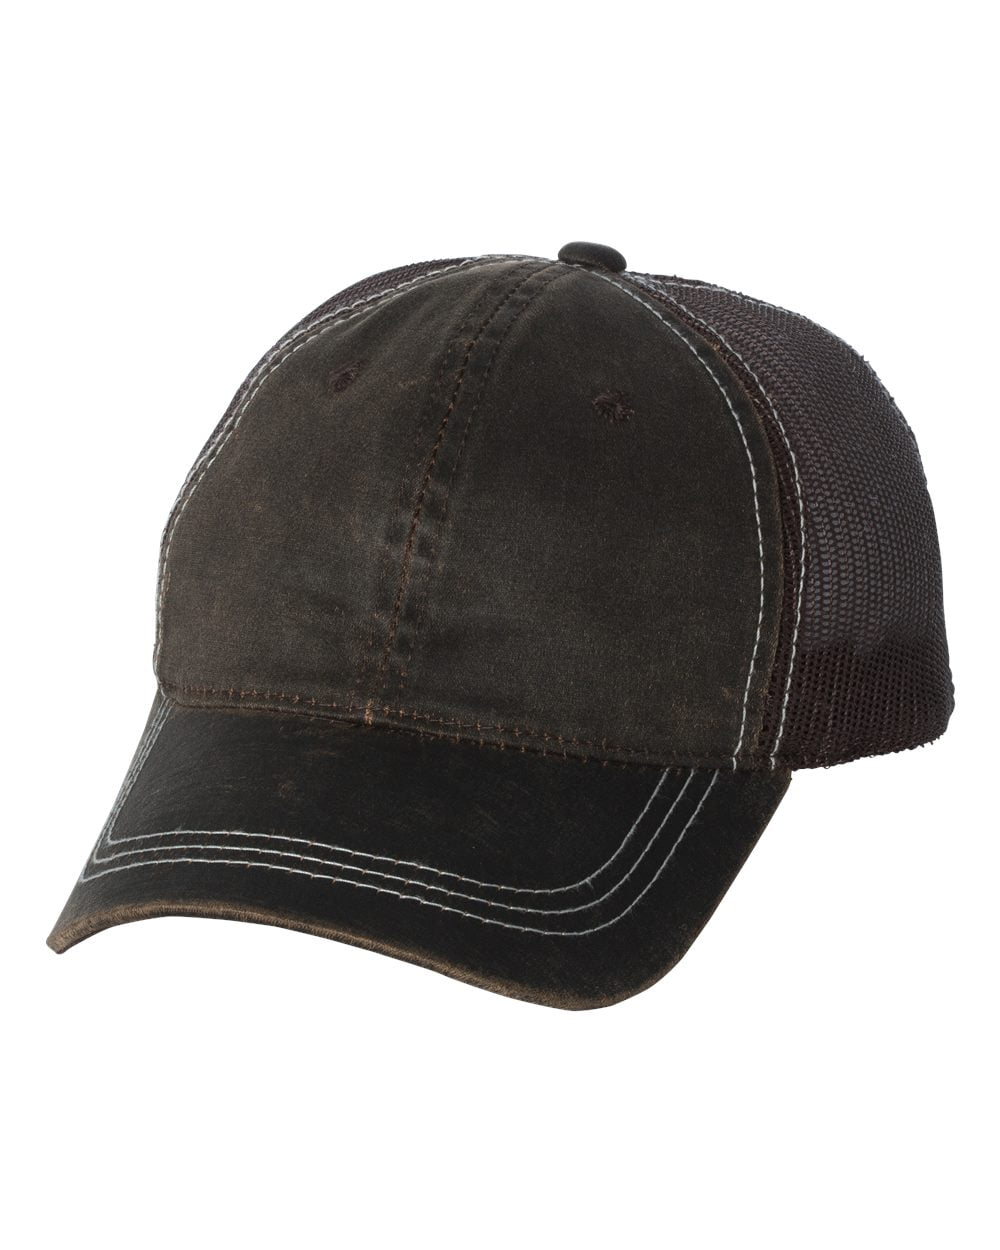 Outdoor Cap Weathered Cotton Mesh Back Trucker Hat HPD610M Baseball Cap 